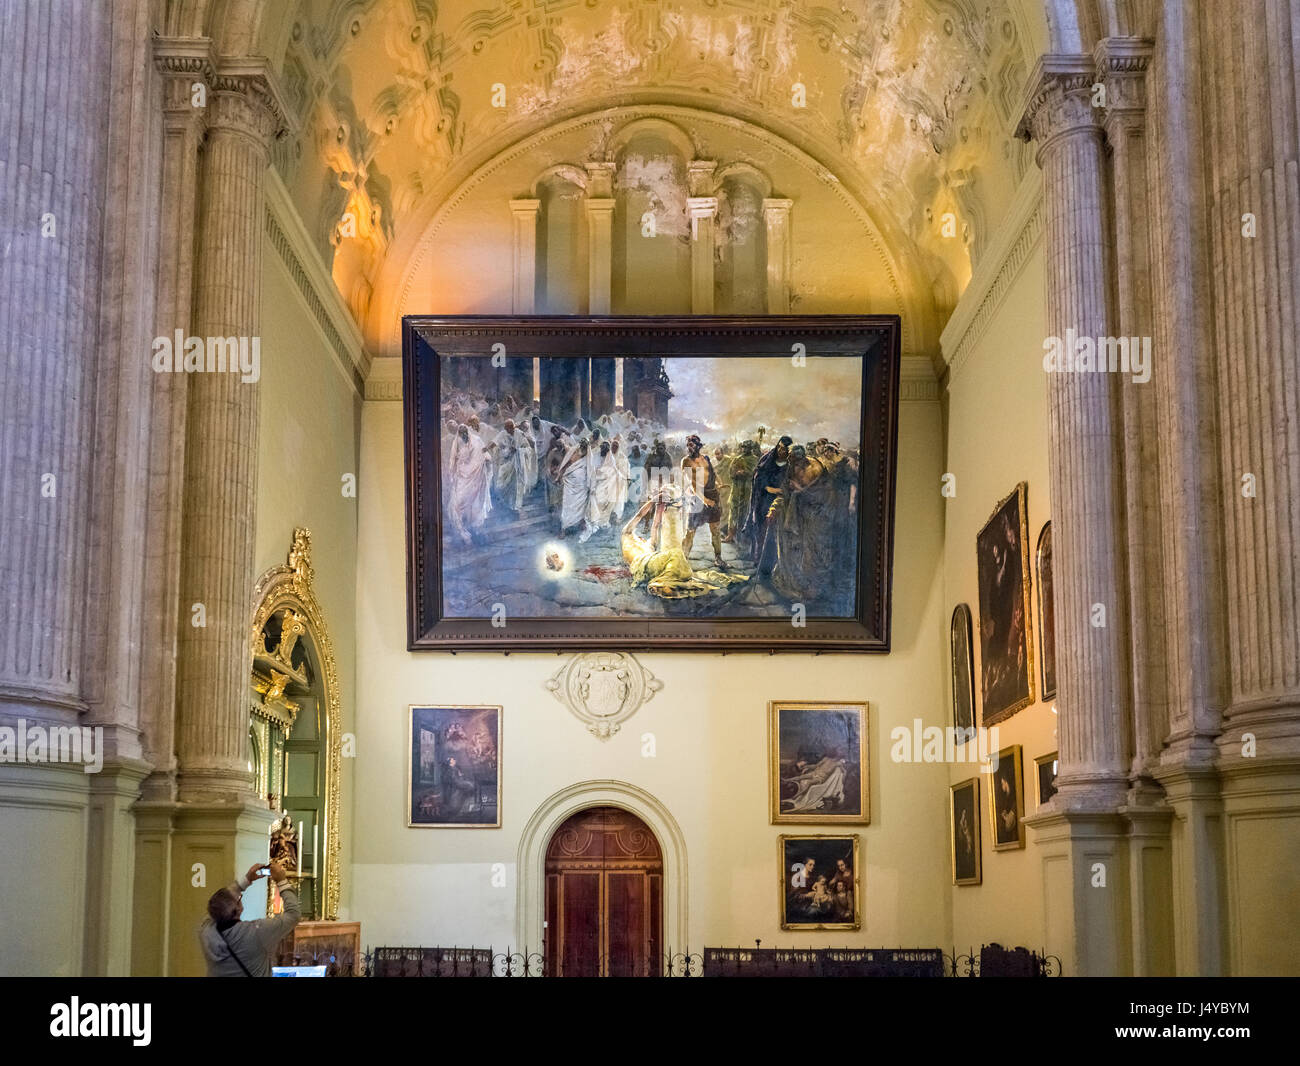 The Beheading of Saint Paul, painting by Simonet. Decapitacion del apostol San Pablo. Malaga Spain Cathedral interior. Stock Photo